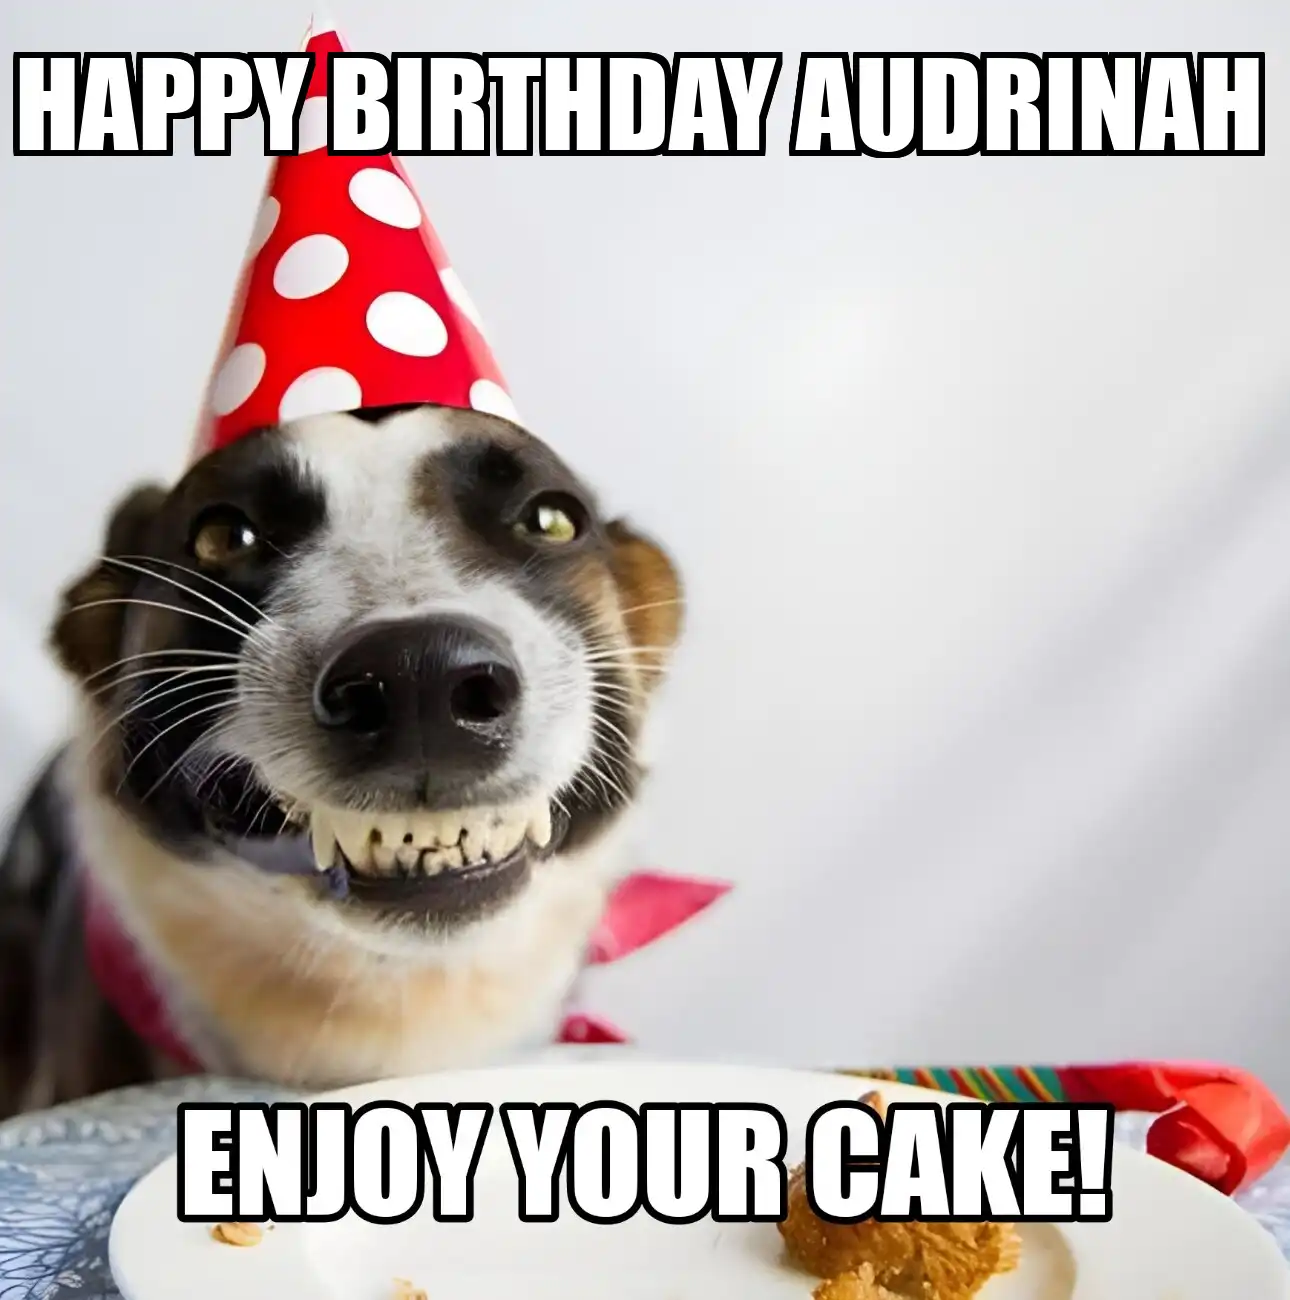 Happy Birthday Audrinah Enjoy Your Cake Dog Meme